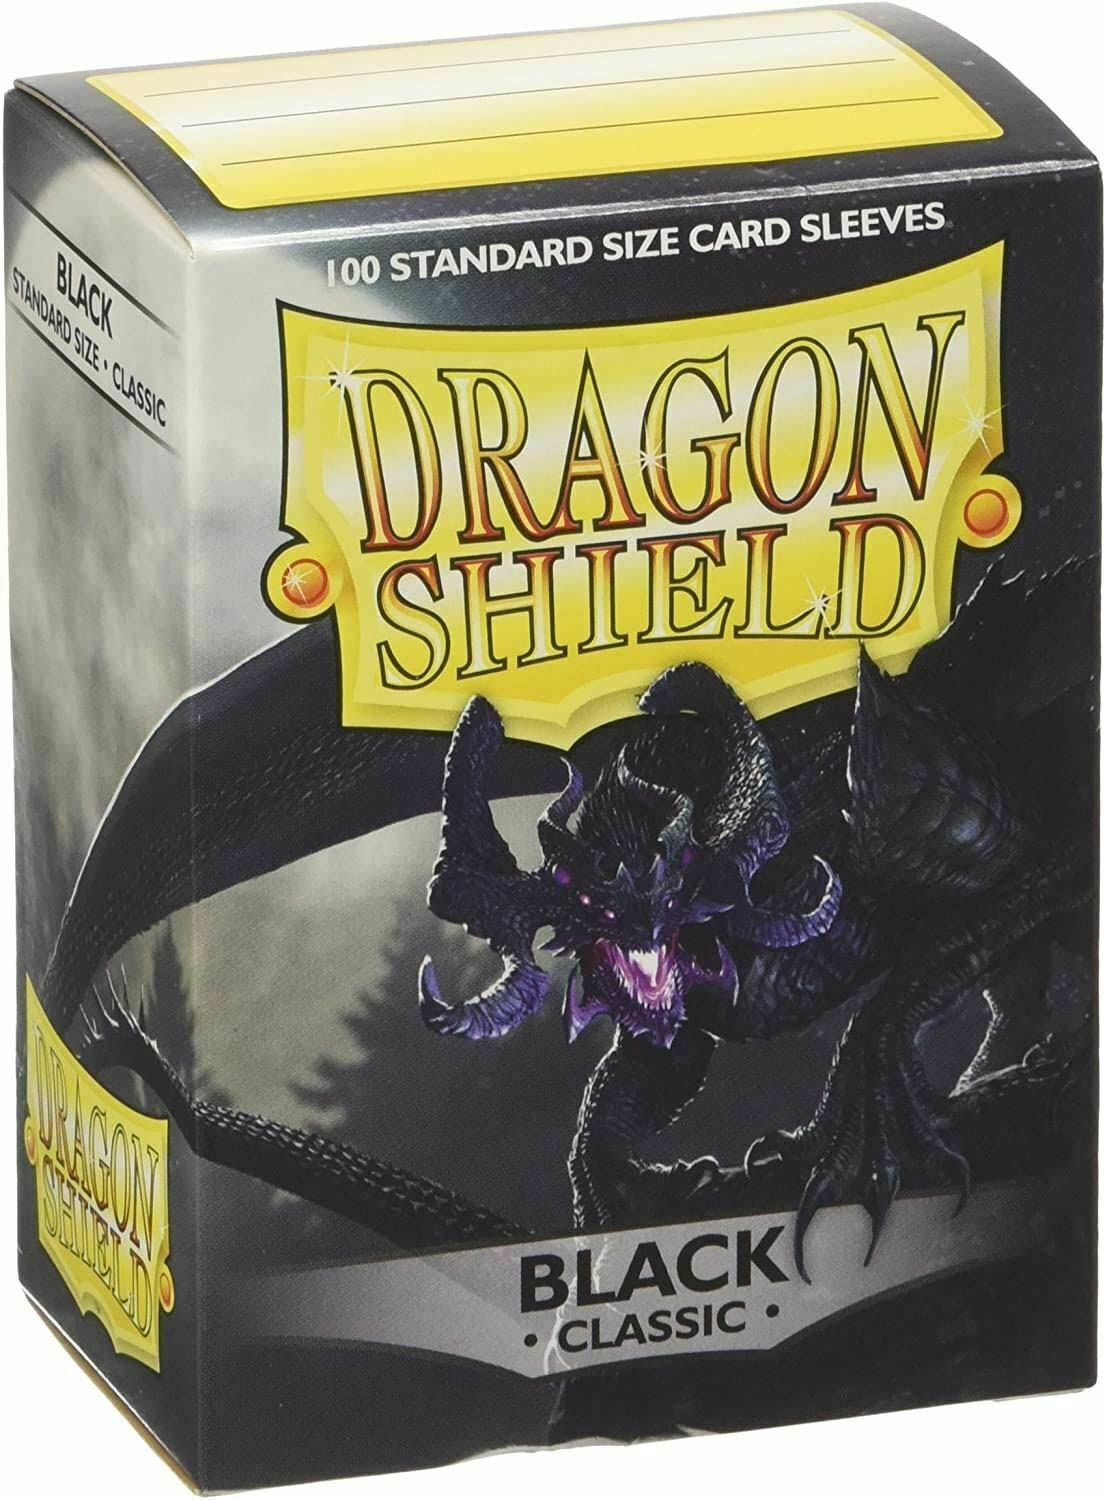 Dragon Shield Protective Sleeves - 100 Pack, Black